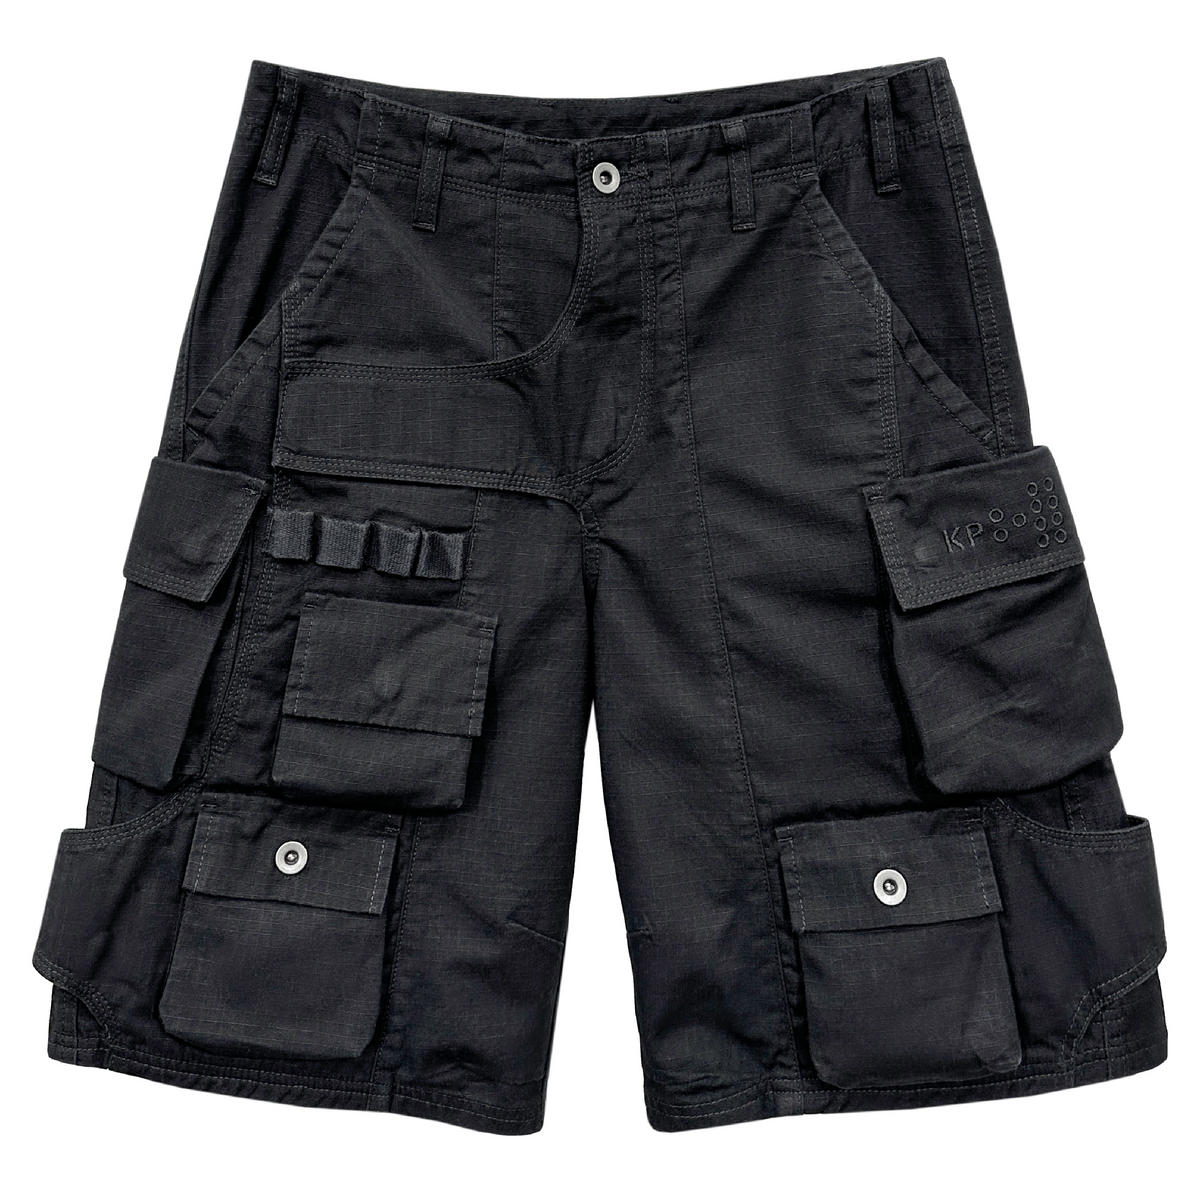 KP2144 Shorts-ONYX – kodyphillips.com